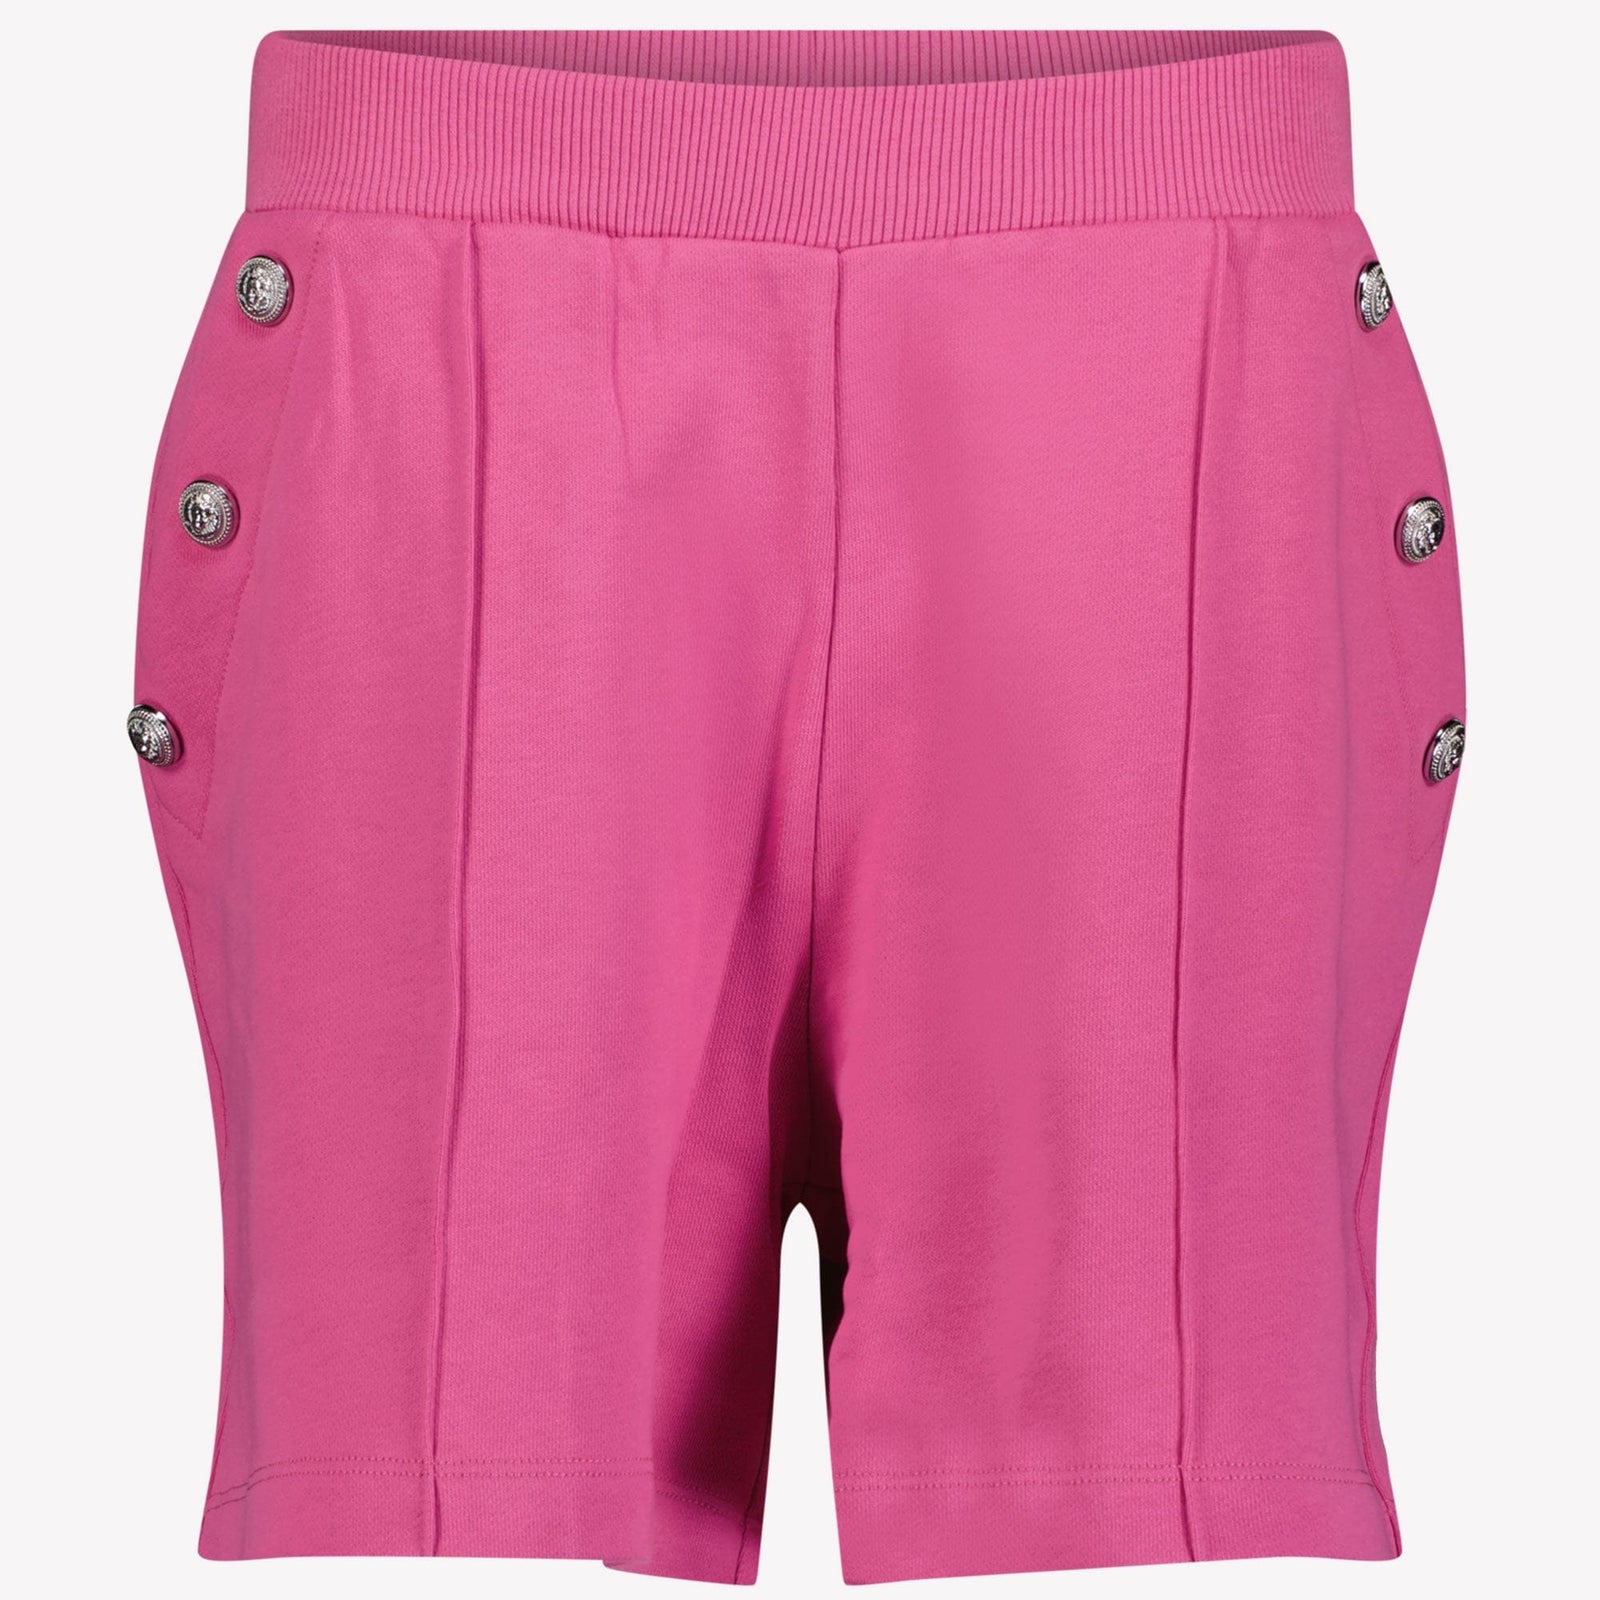 Balmain Piger shorts fuchsia